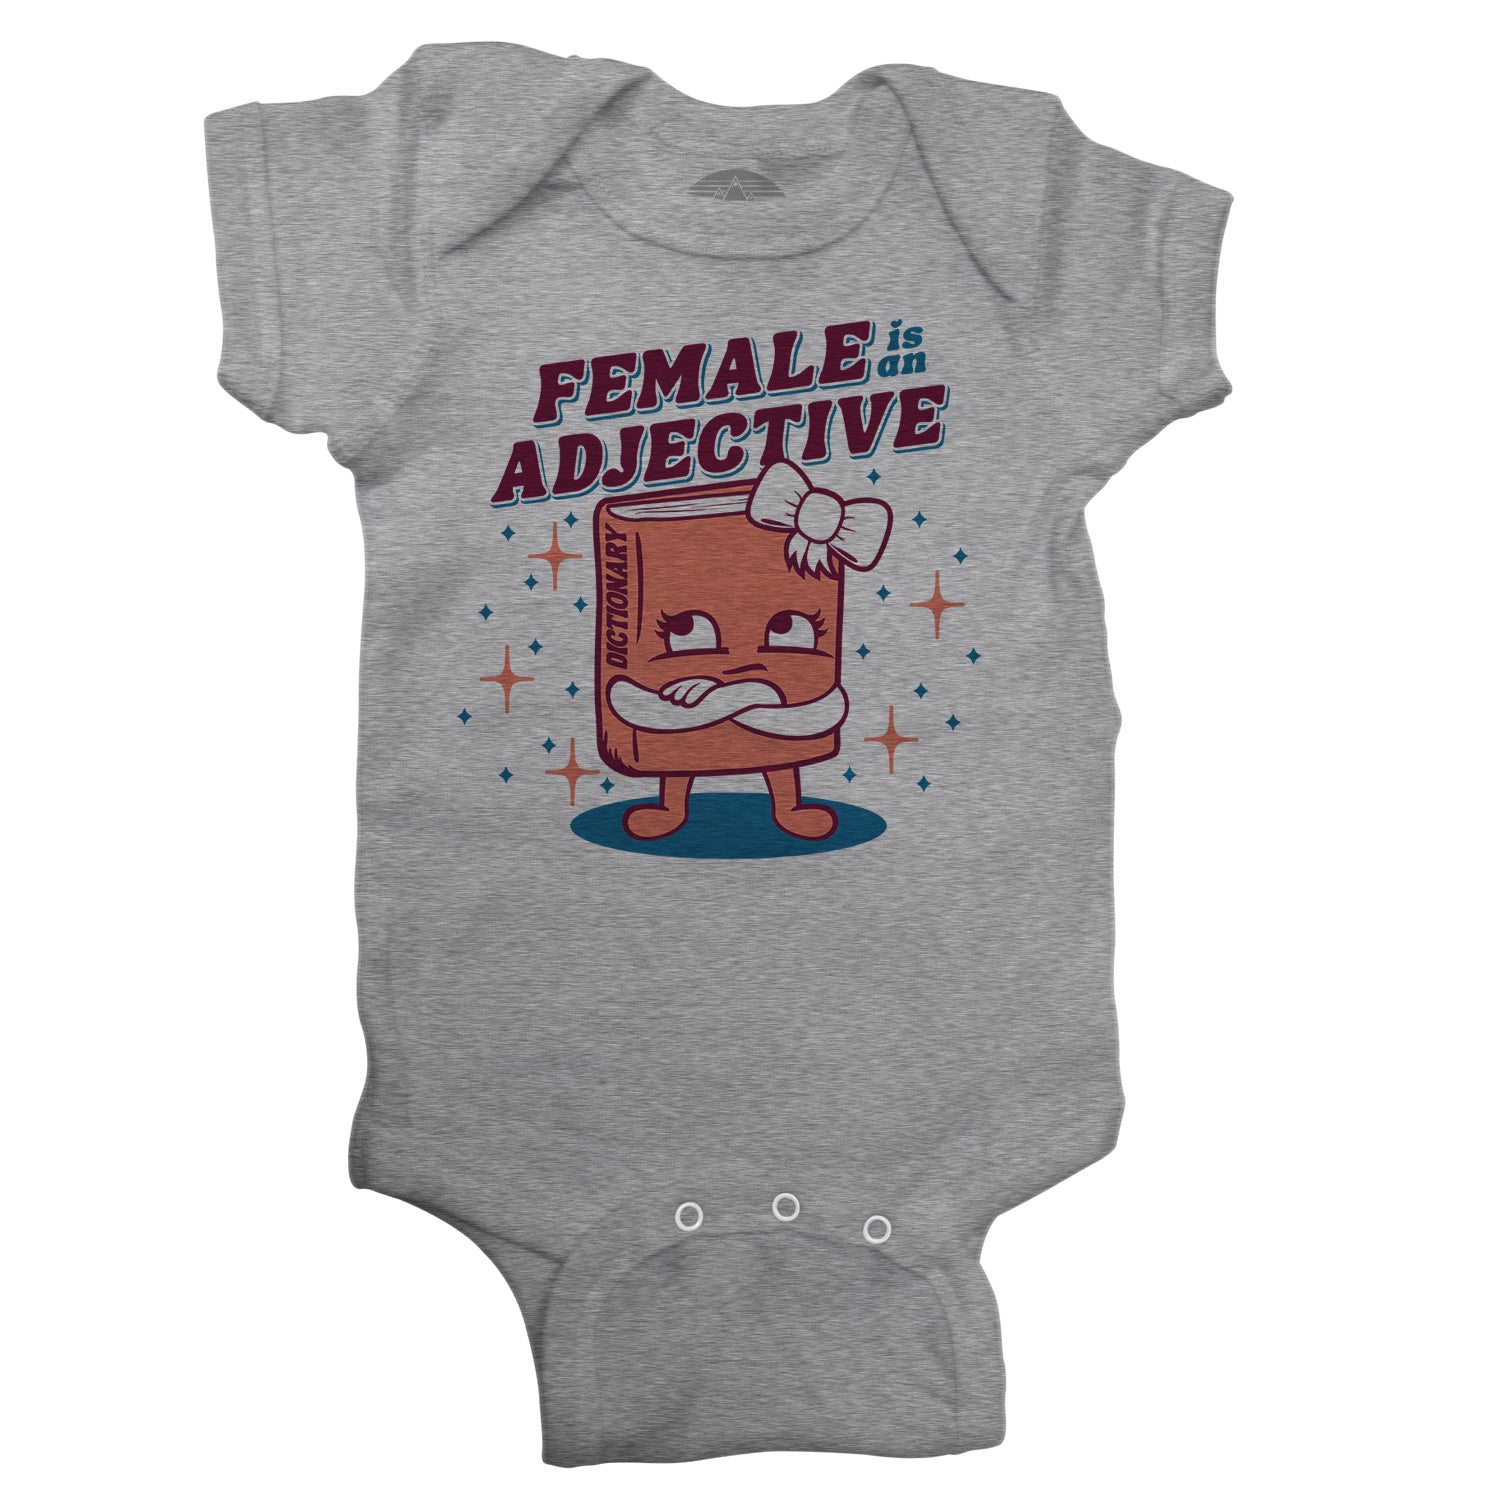 Female is an Adjective Infant Bodysuit - Unisex Fit